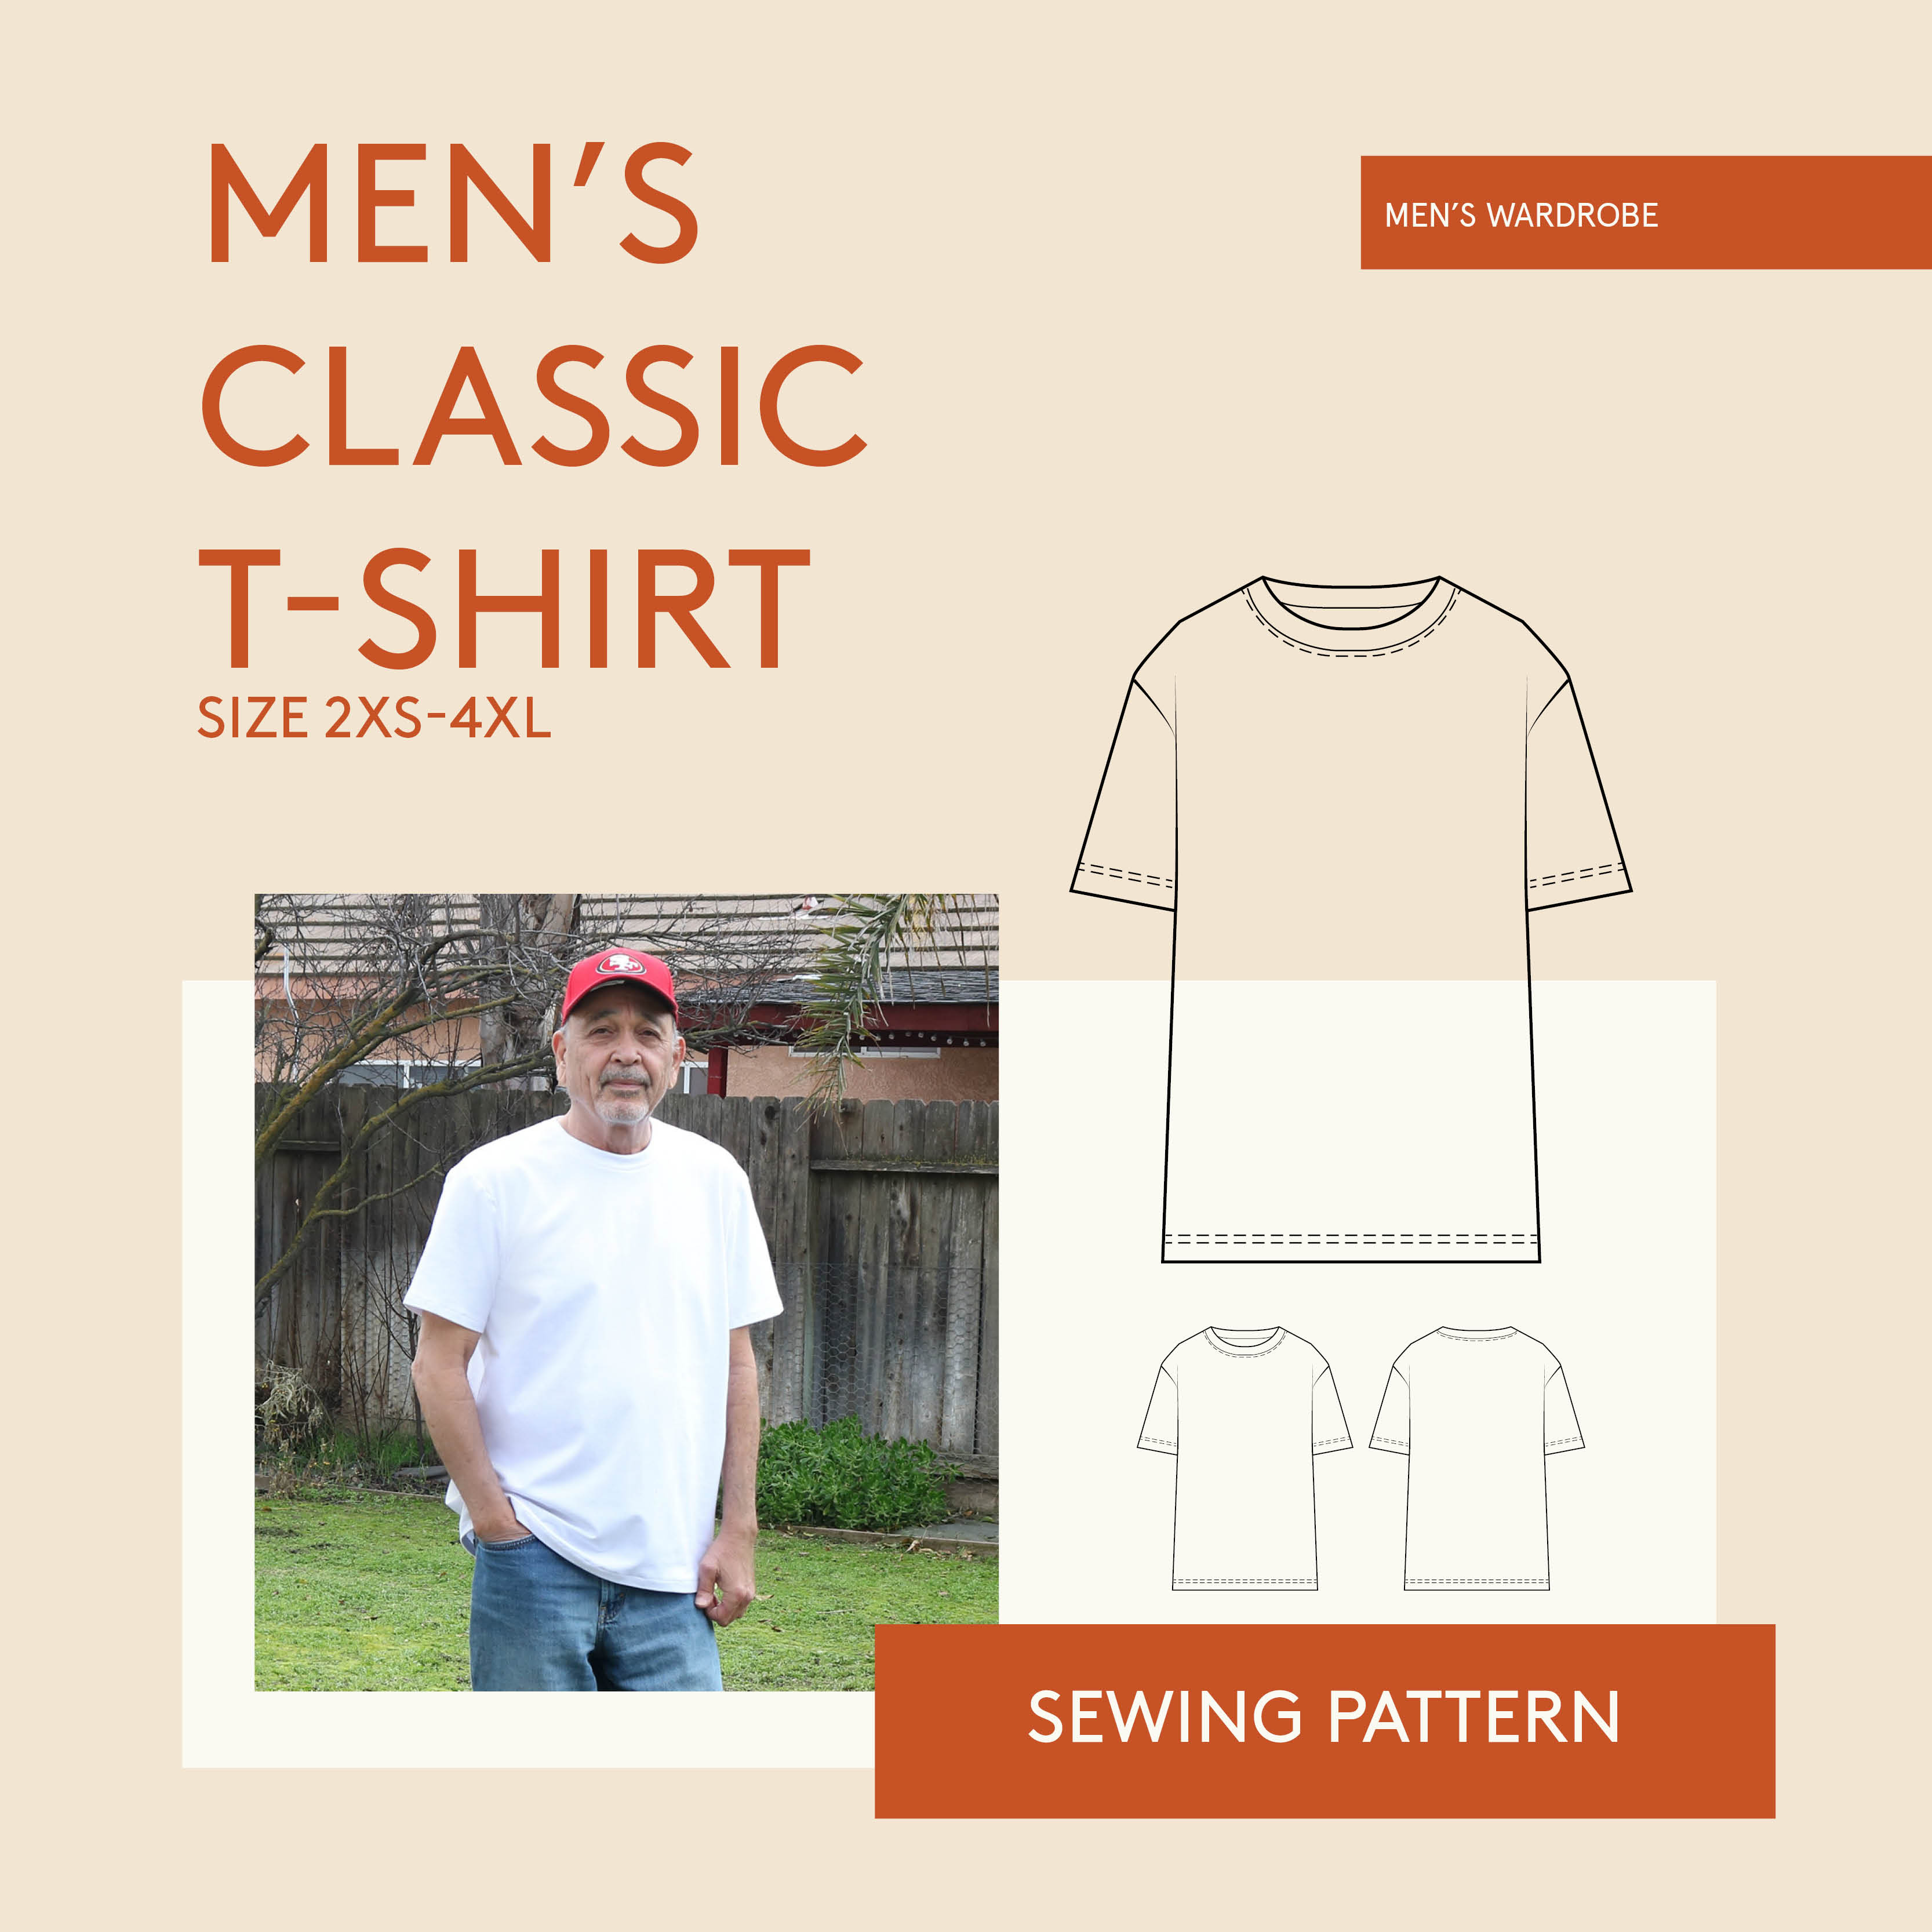 Wardrobe by Me Men's Classic T-shirt